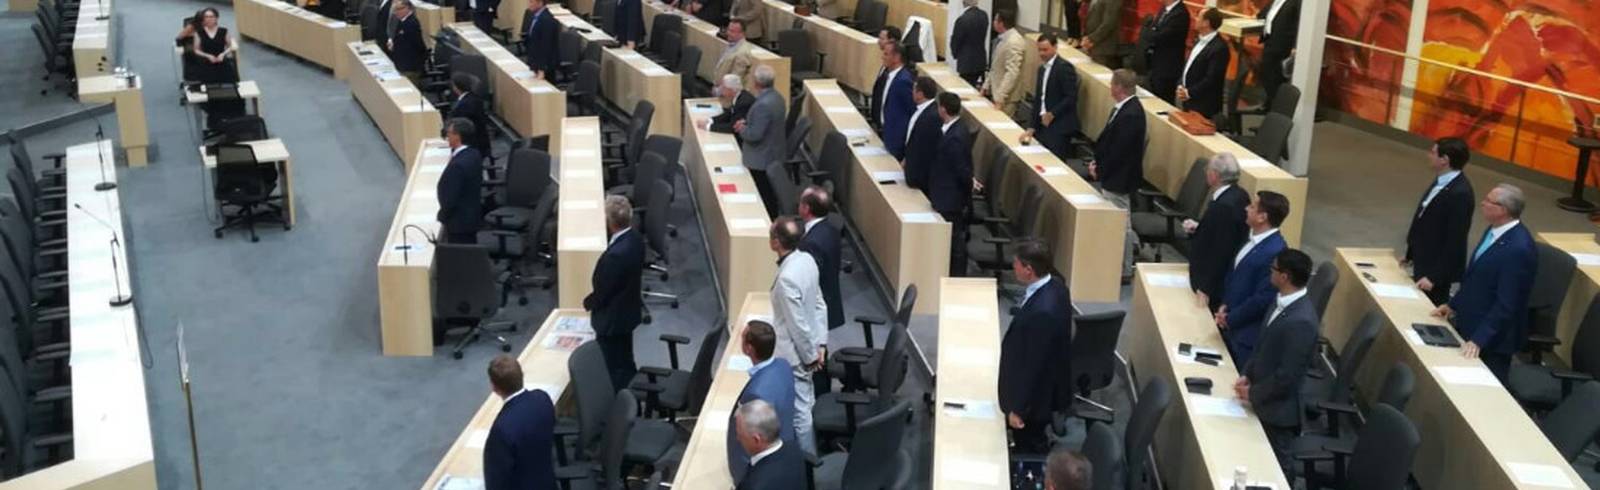 Eklat: Frauen verlassen wegen Pilz den Plenarsaal des Parlaments